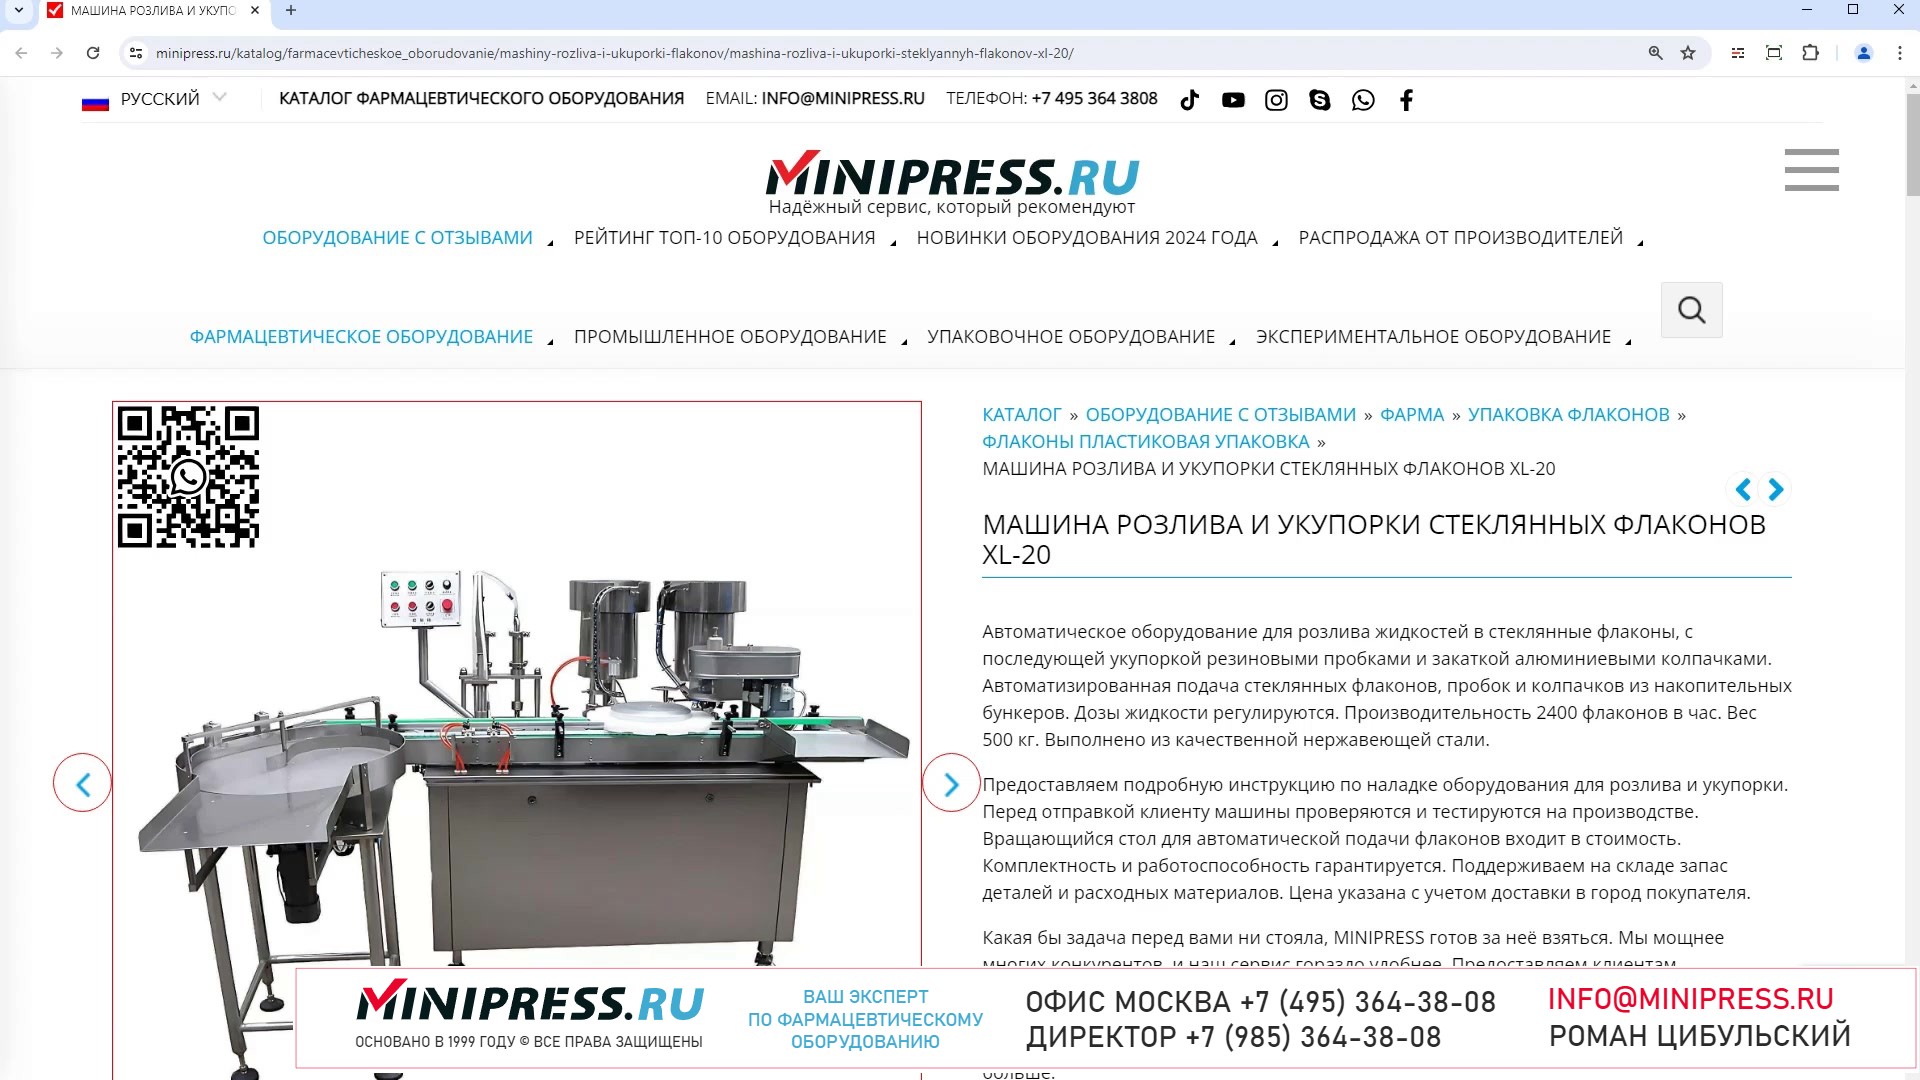 Minipress.ru Машина розлива и укупорки стеклянных флаконов XL-20